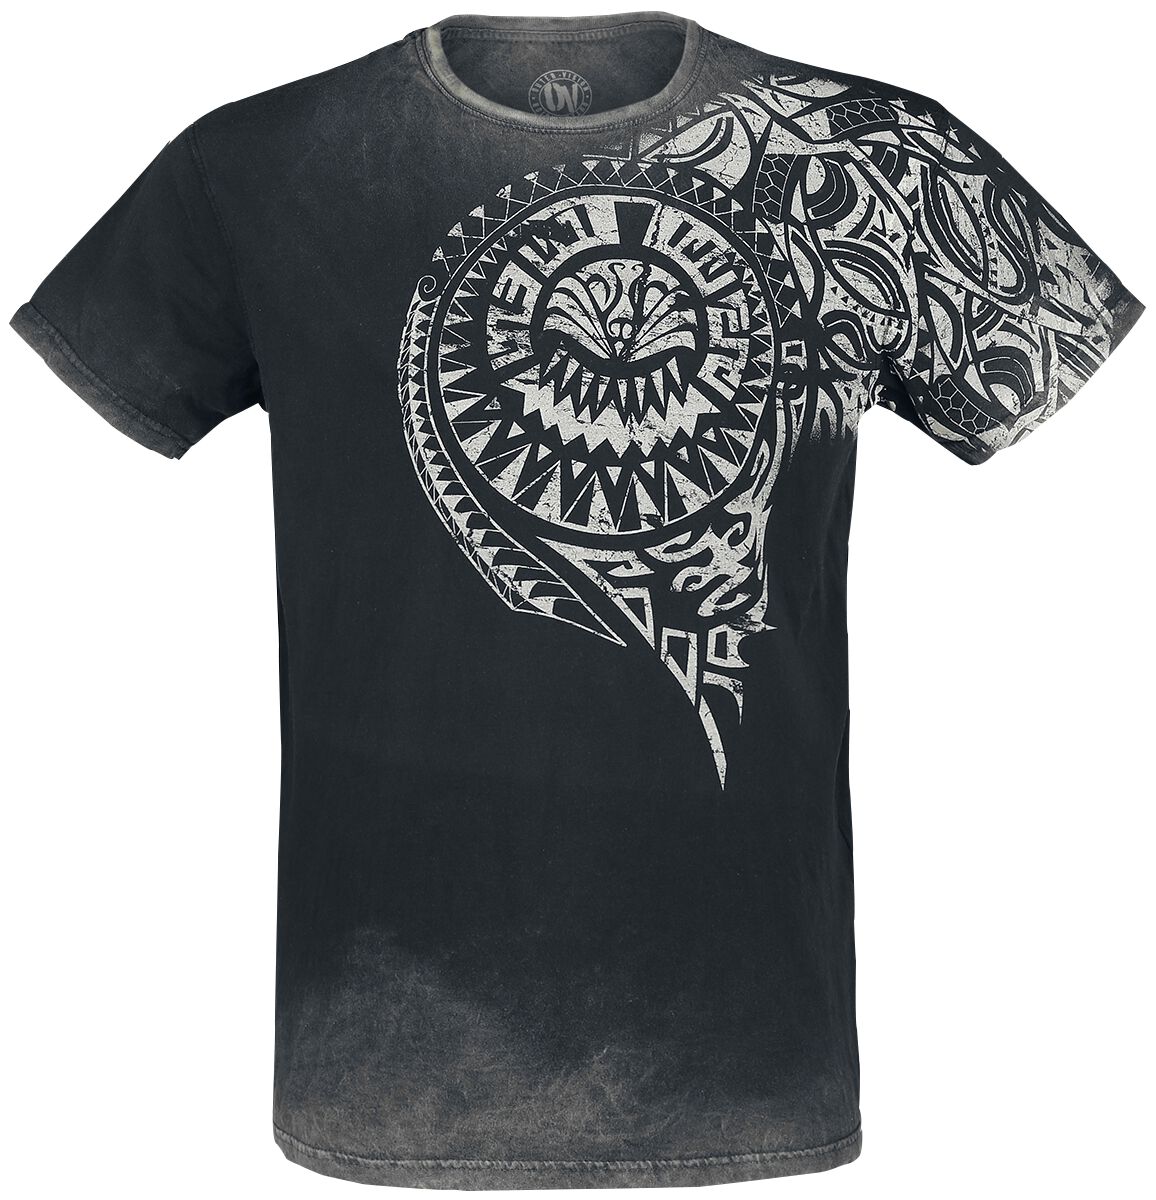 Outer Vision T-Shirt - Burned Tattoo - S bis 4XL - für Männer - Größe 3XL - grau